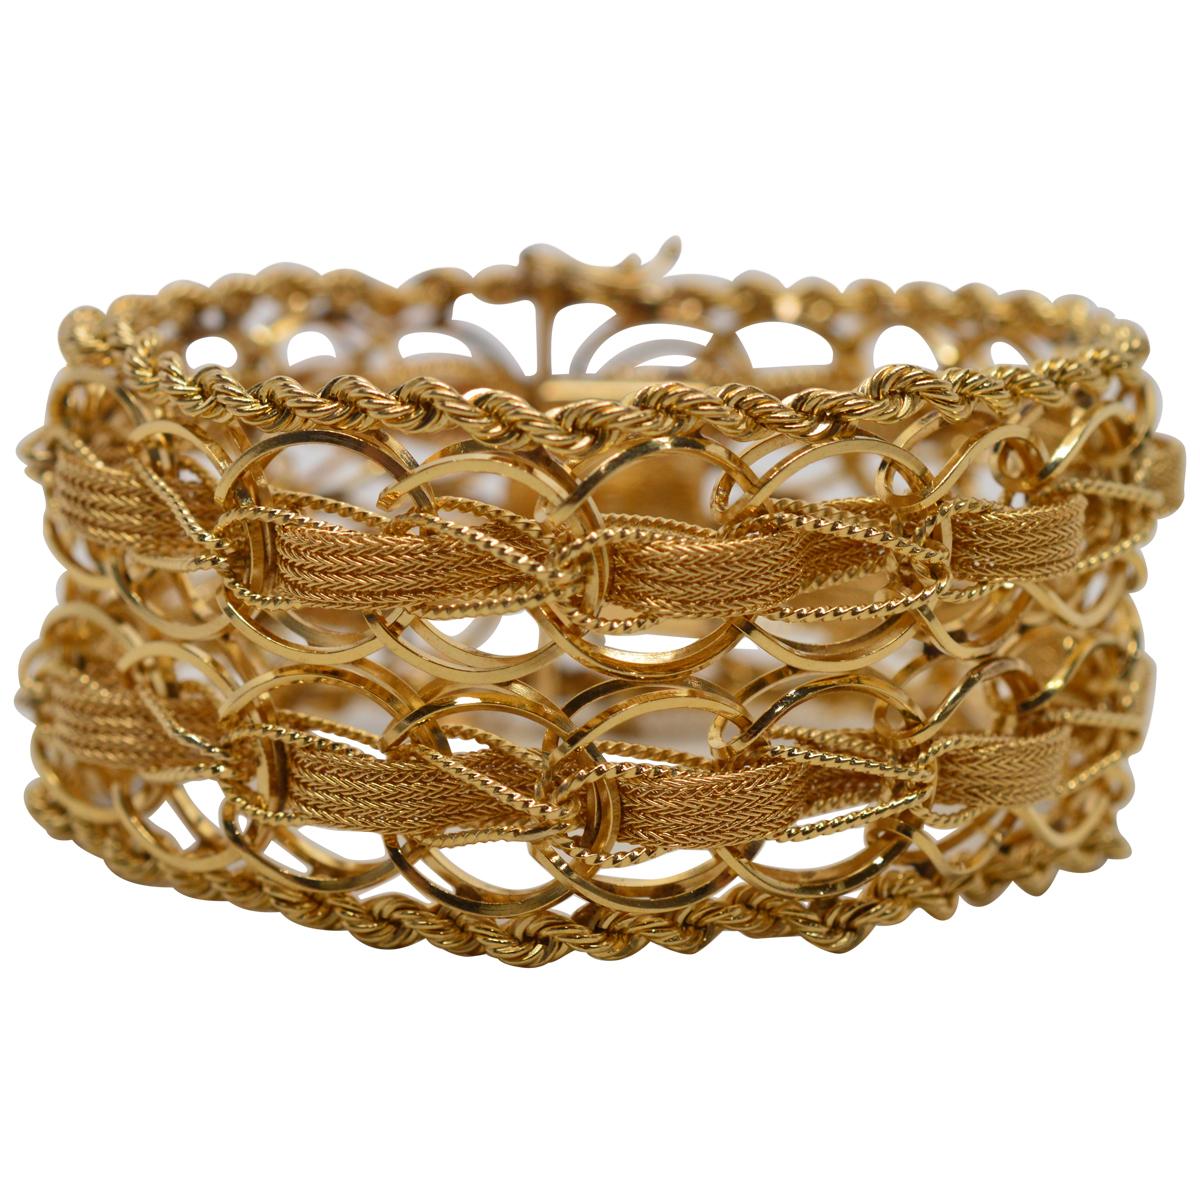  Wide Woven Double Chain Link 14 Karat Yellow Gold Bracelet For Sale